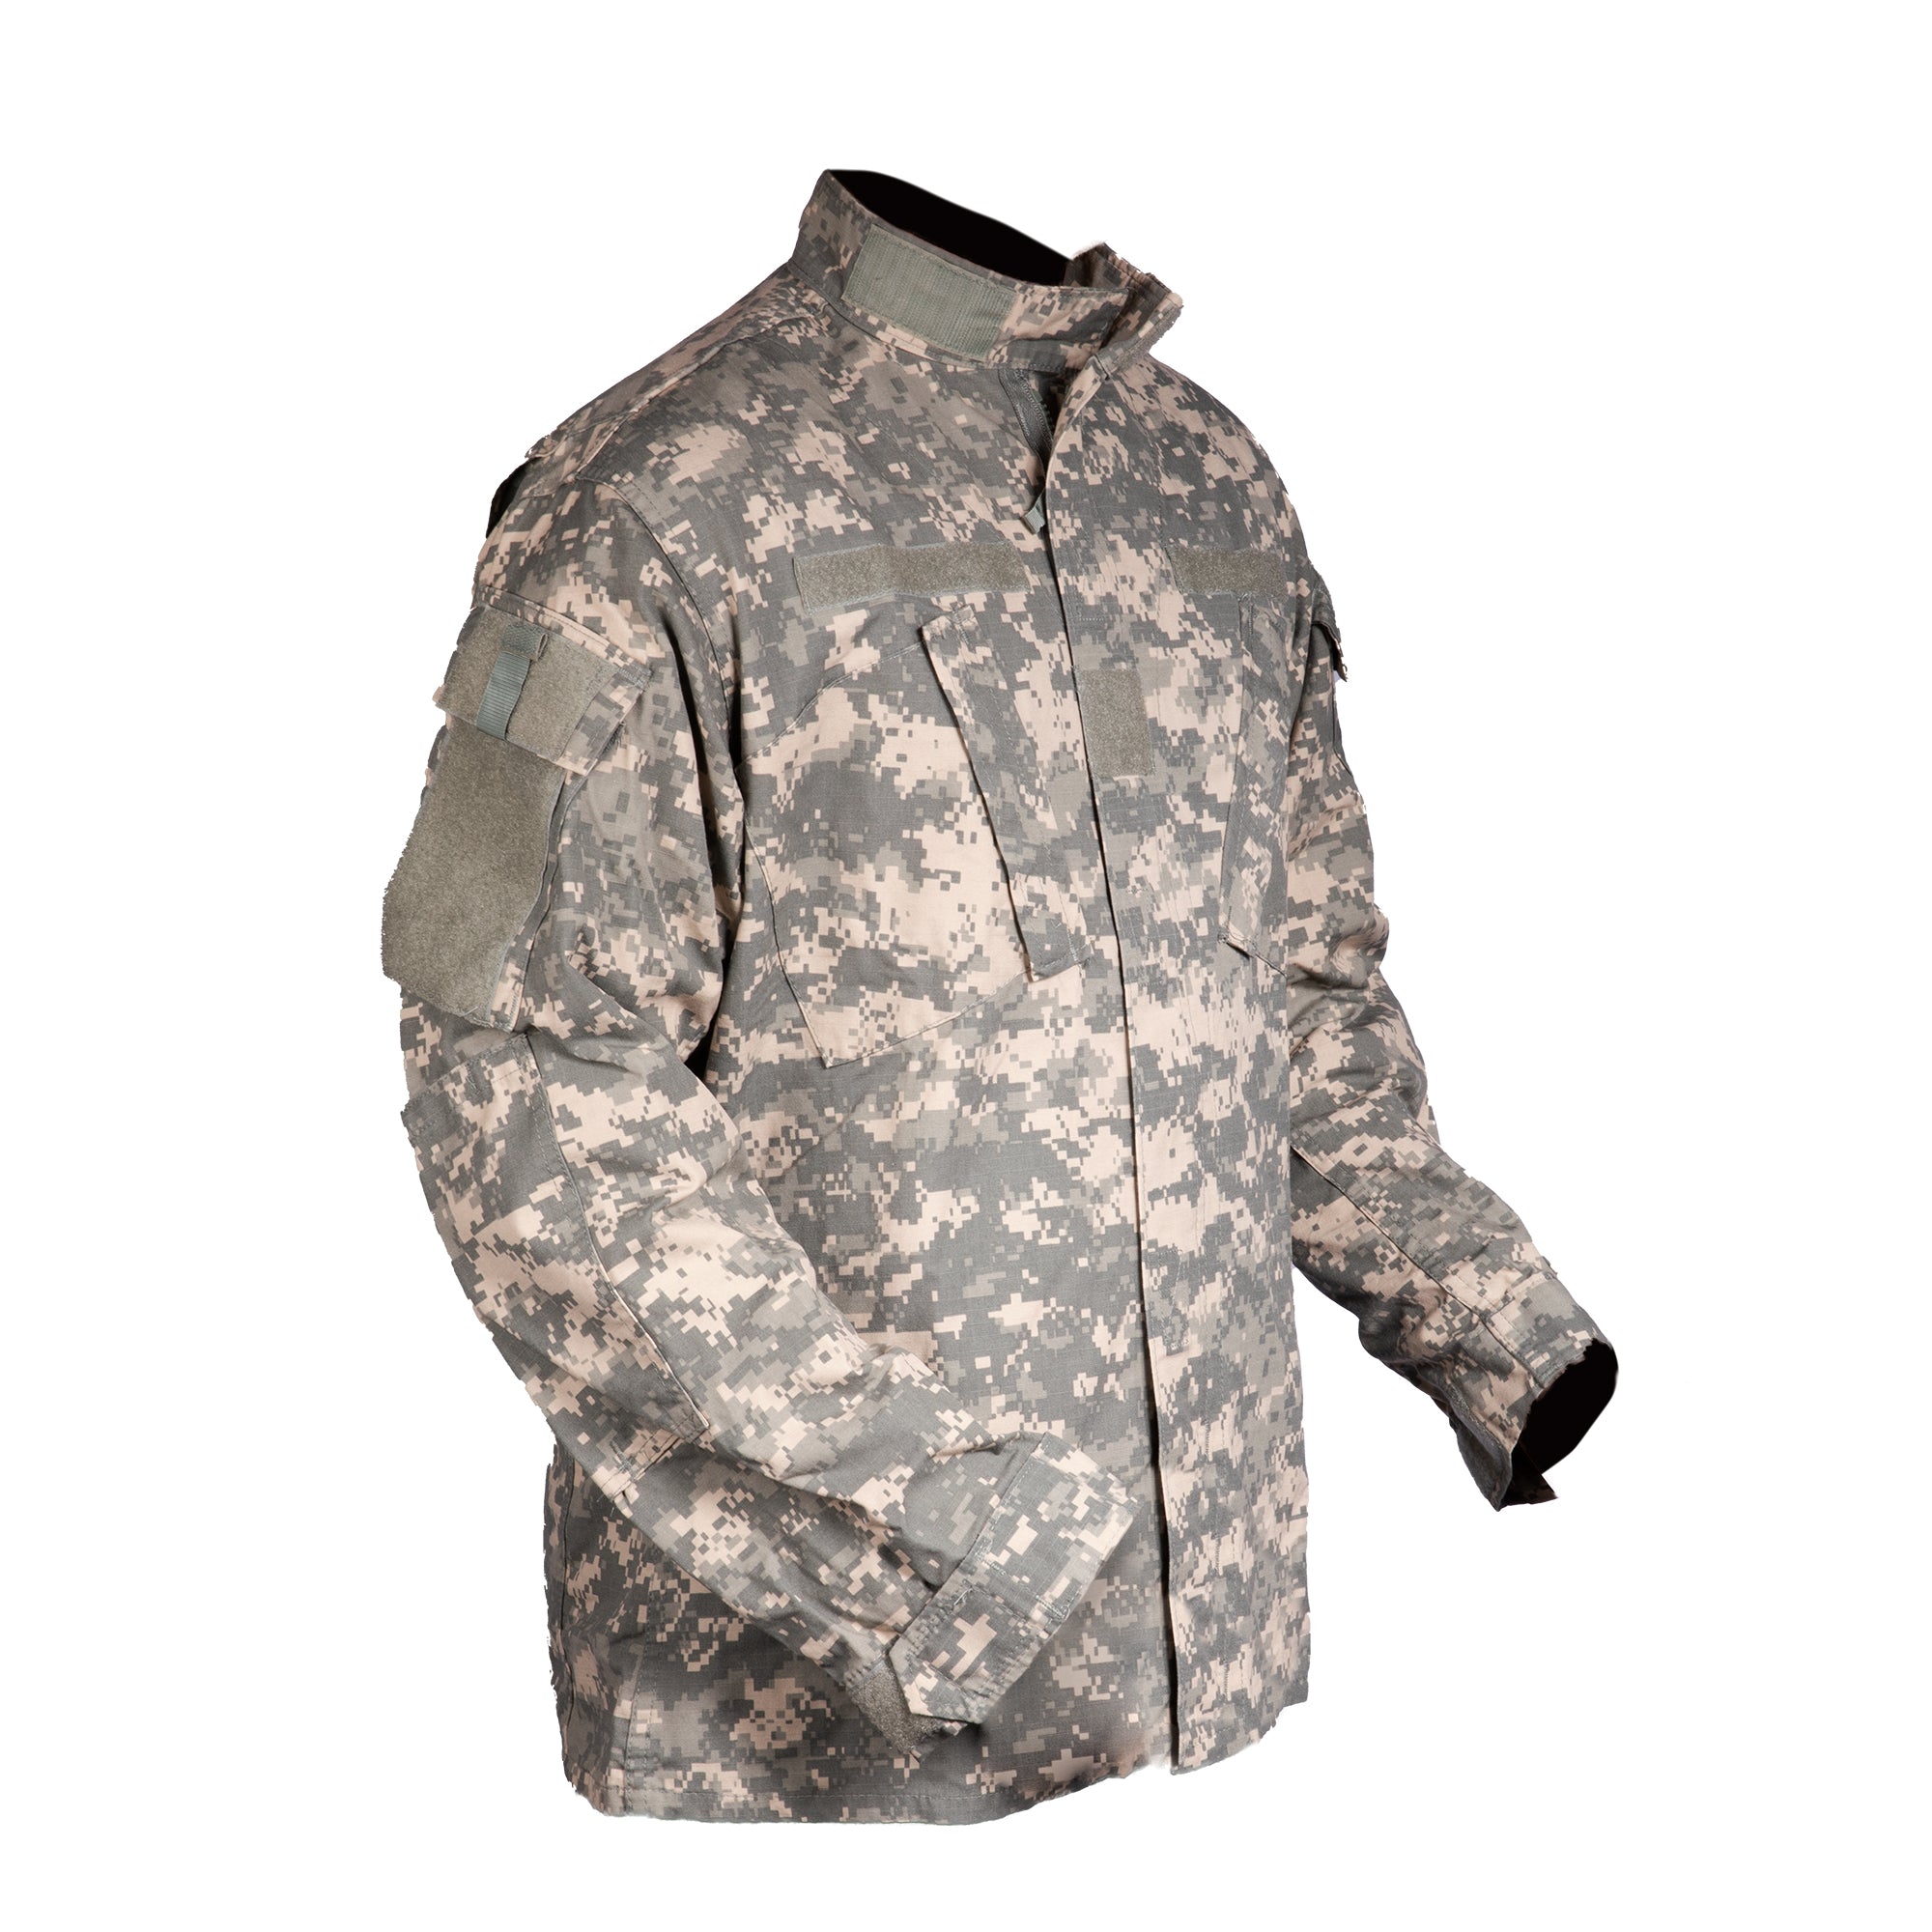 12 US Army Military Uniform Ucp Acu Uniform Patches Patch